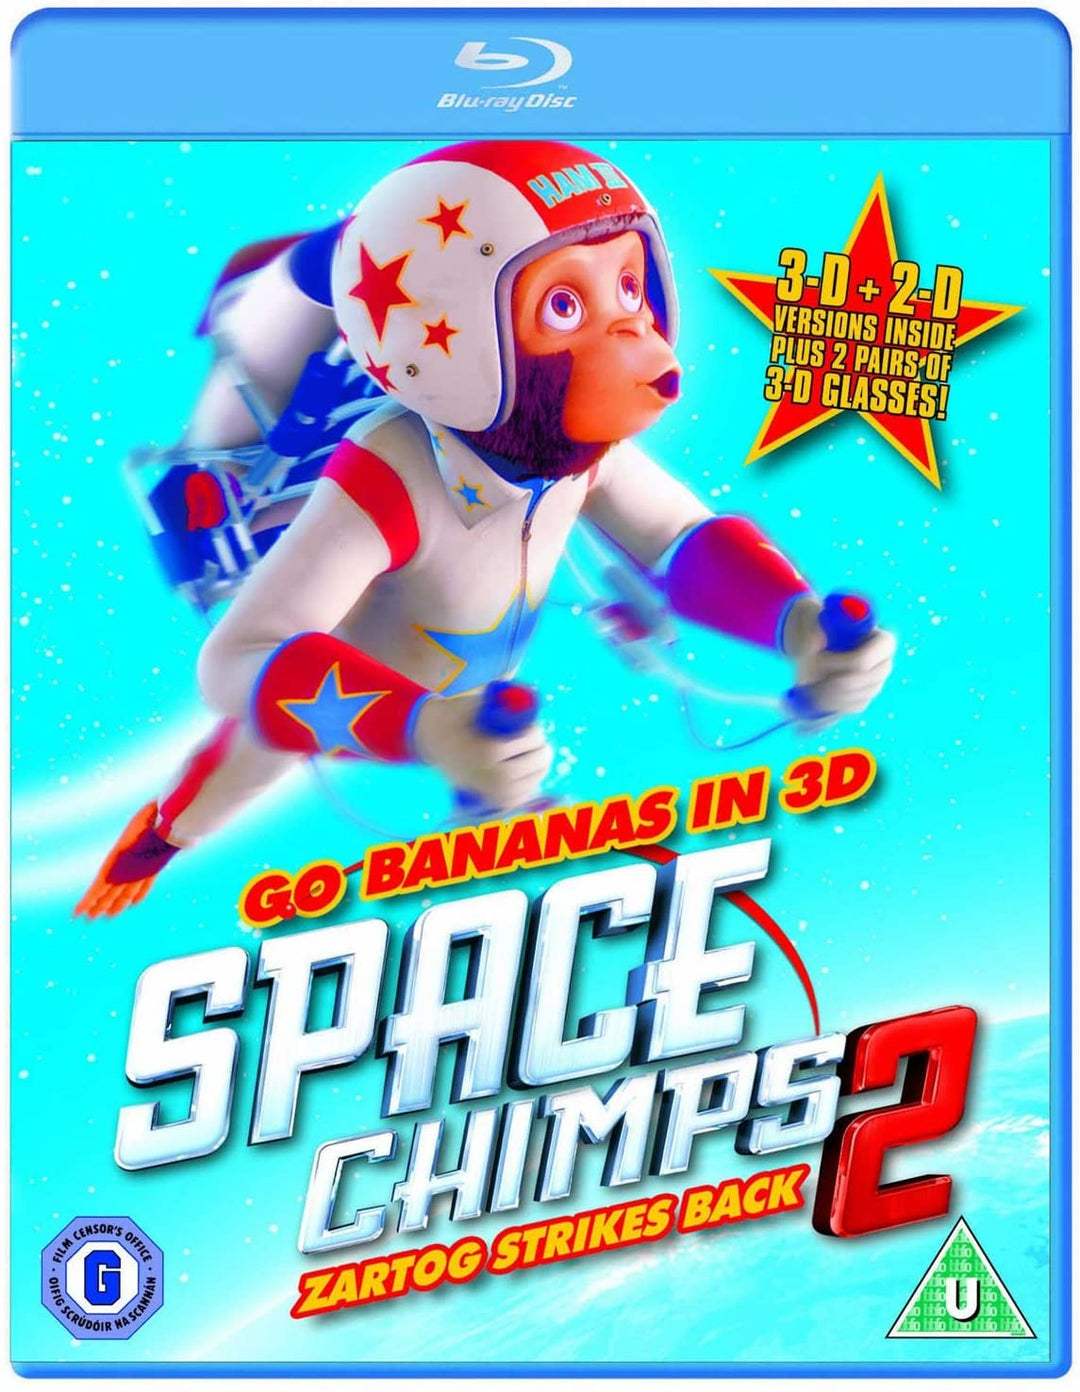 Space Chimps 2 - Zartog colpisce ancora [Blu-ray]